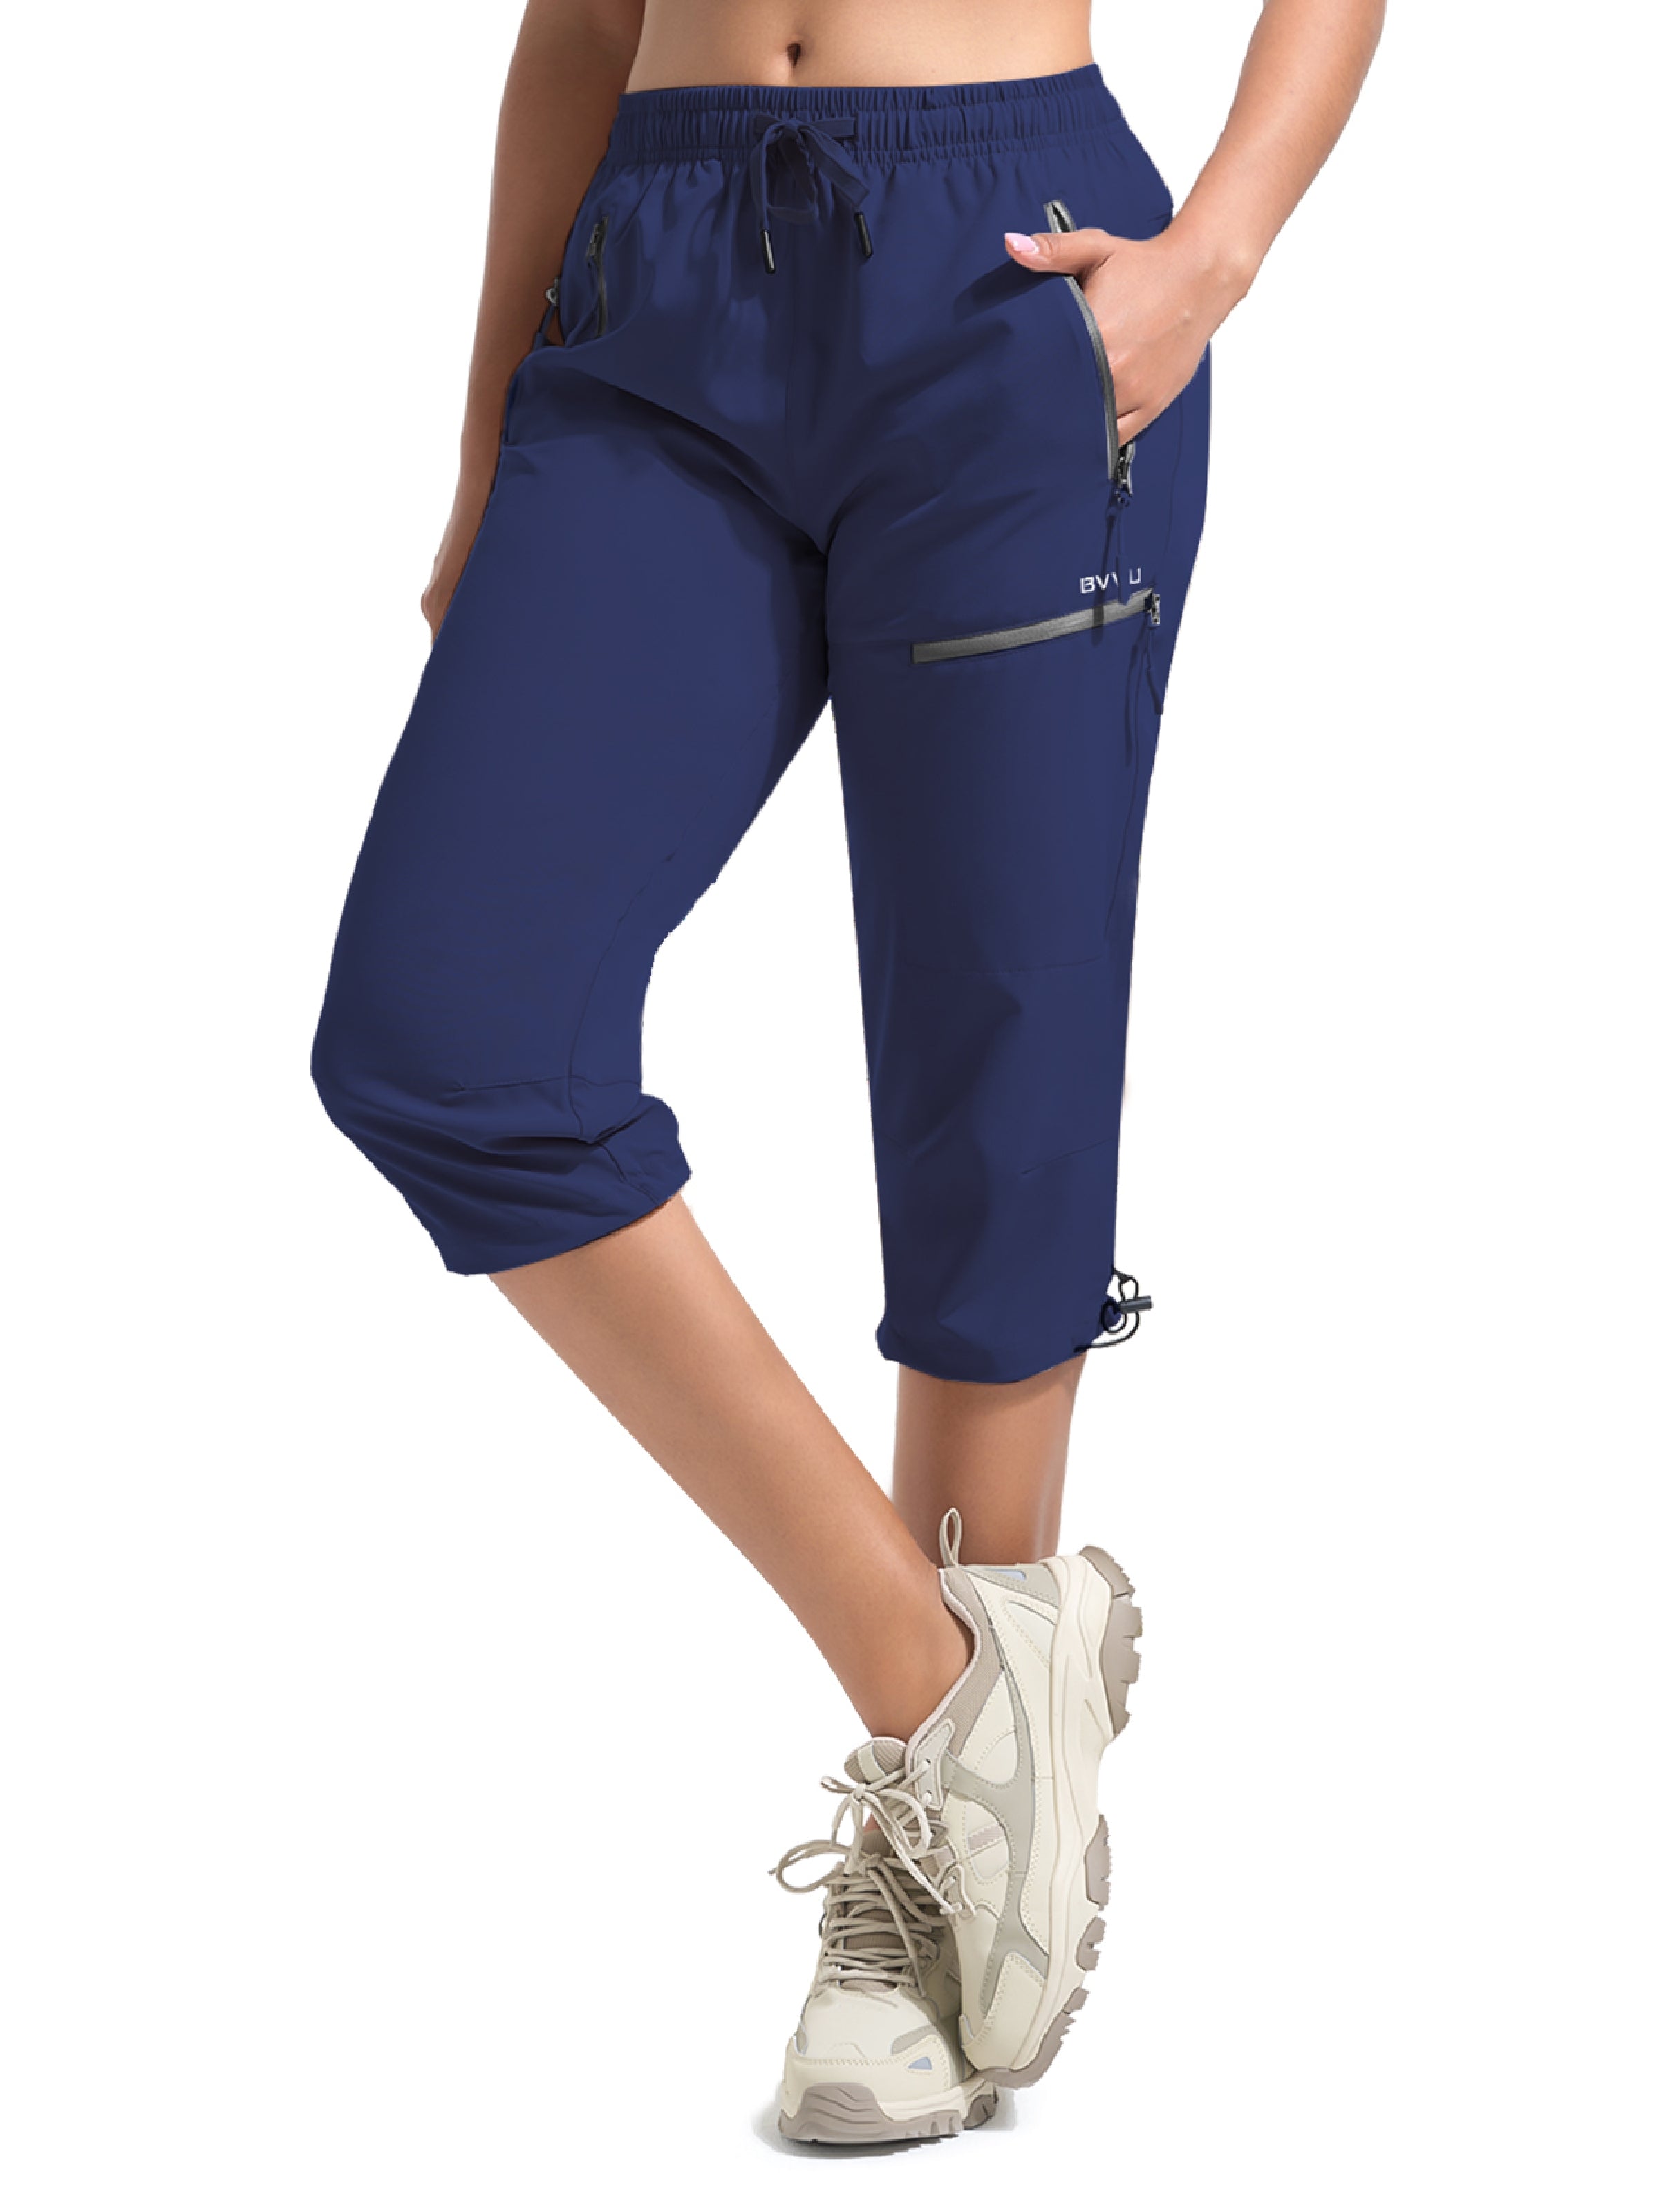 BVVU Women's Cargo Capris Hiking Pants Lightweight Quick Dry Joggers Summer Outdoor Waterproof Workout Pants with Pockets